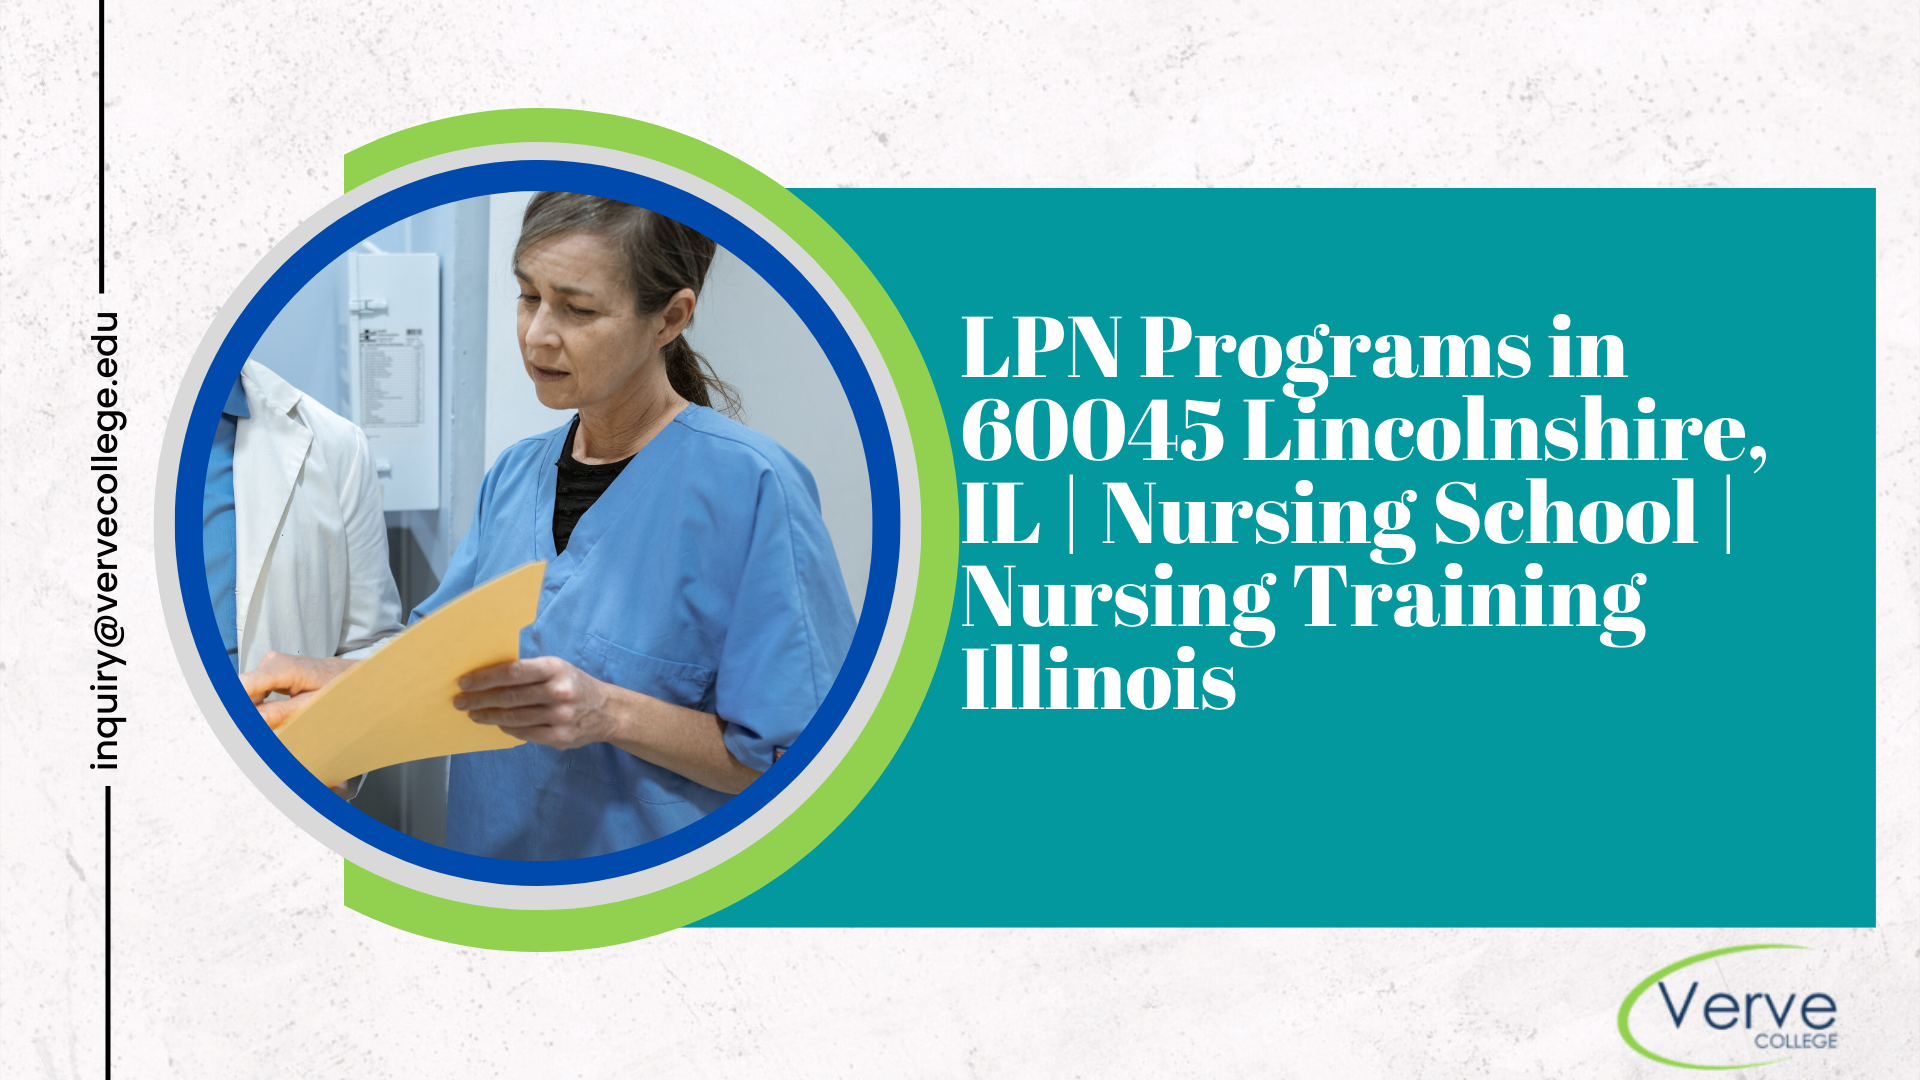 LPN Programs in 60045 Lincolnshire, IL | Nursing School | Nursing Training Illinois